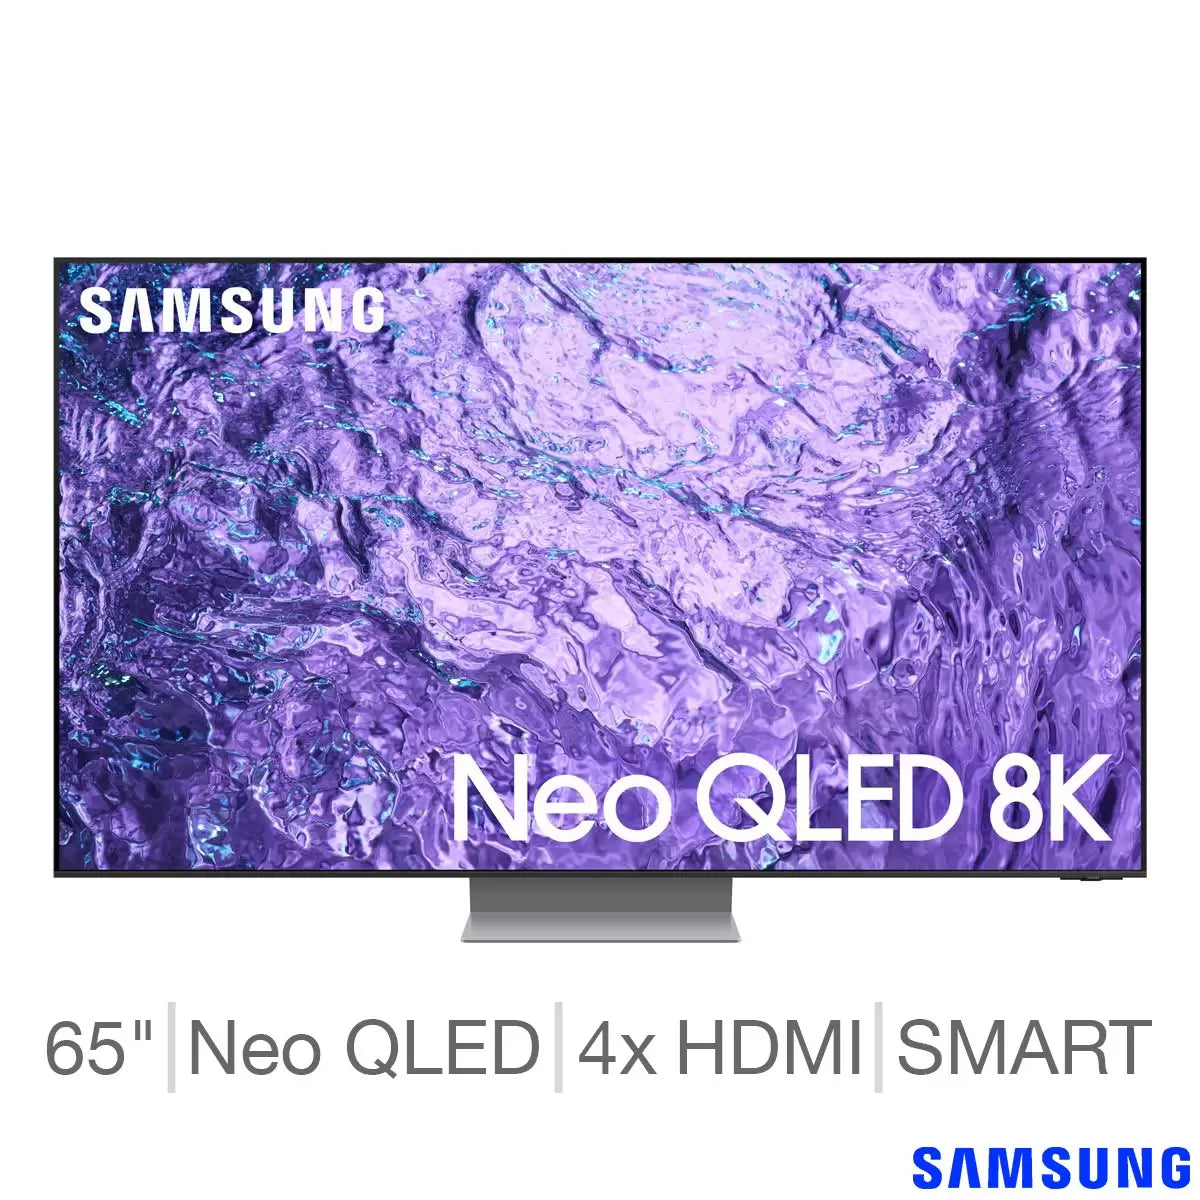 Samsung Neo QLED 8K Ultra HD Smart TV - 65 Inch